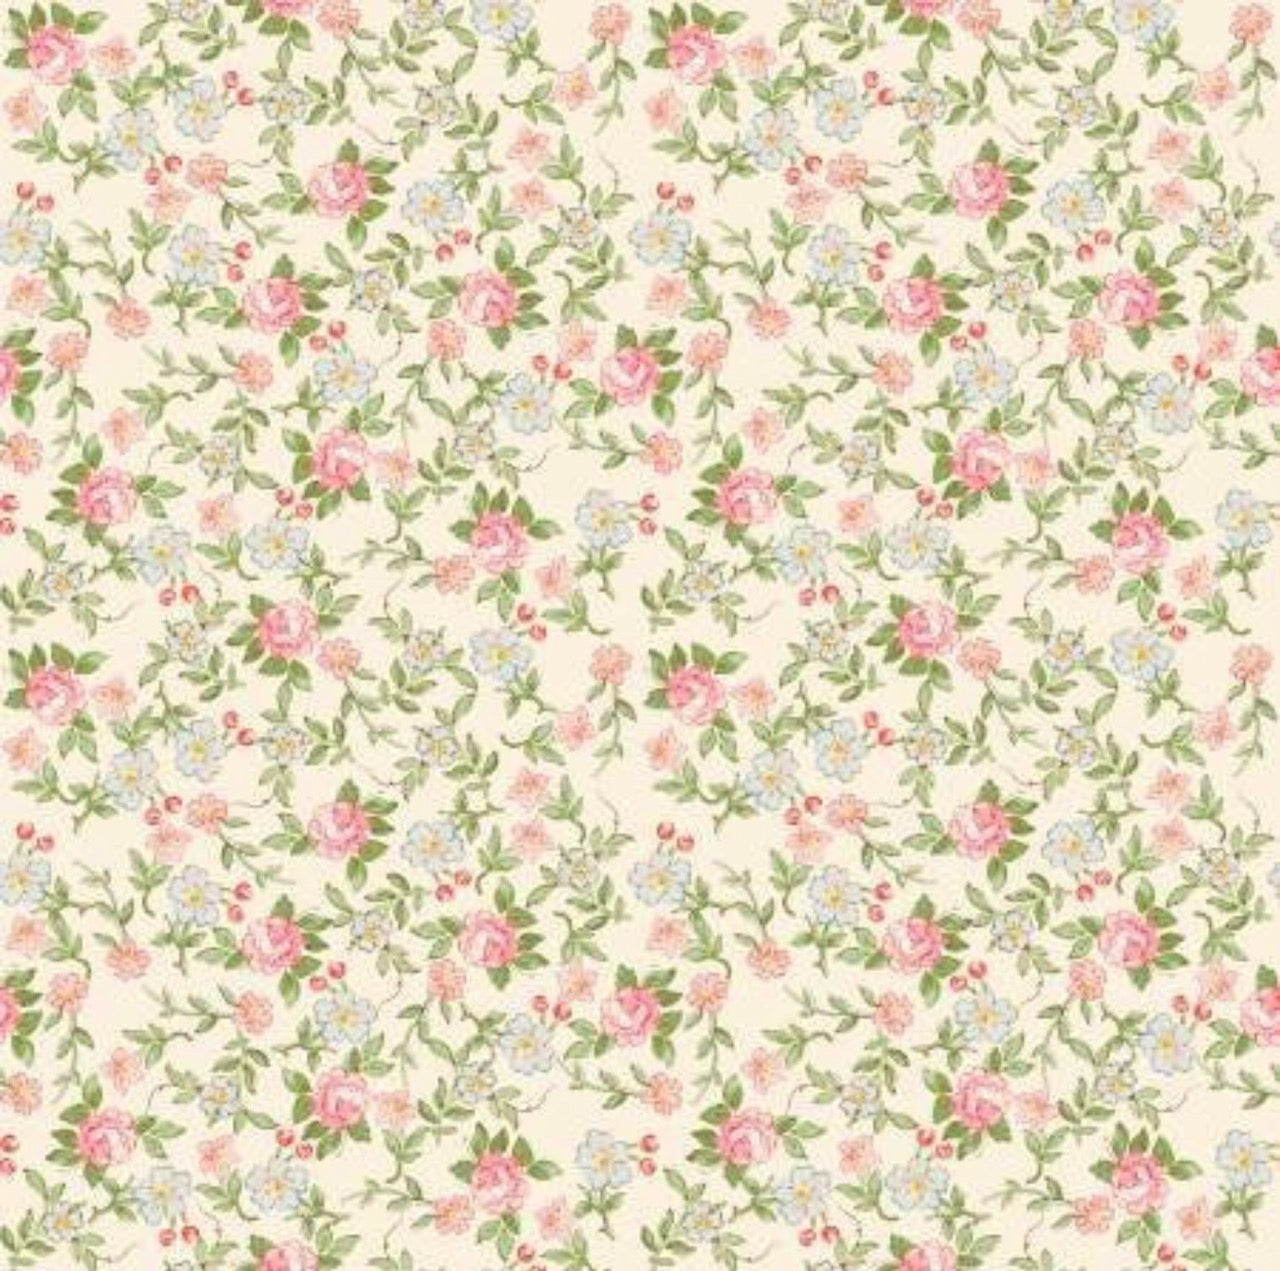 Rose & Violet`s garden Fabric Fat Quarter Collection. No 3